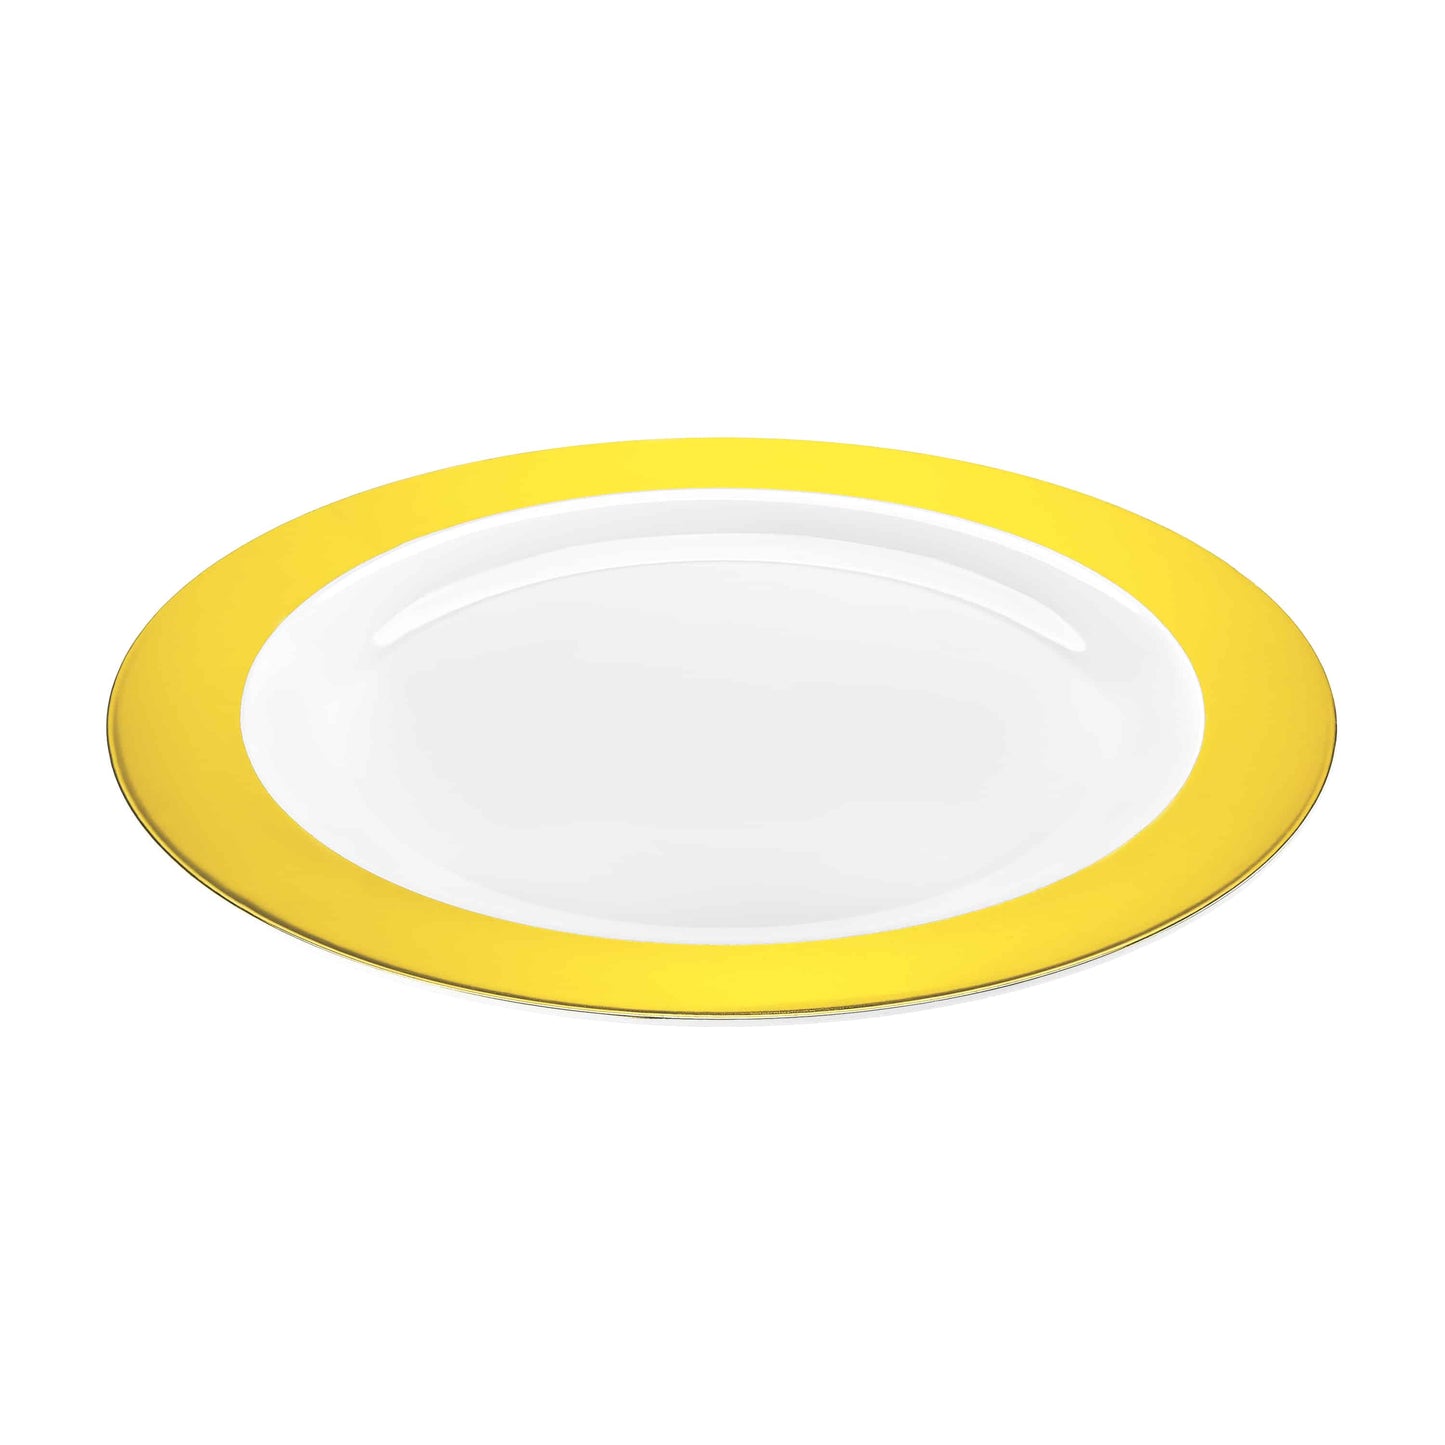 Magnificence Gold Rim Premium Plastic Round Dinnerware - King Zak